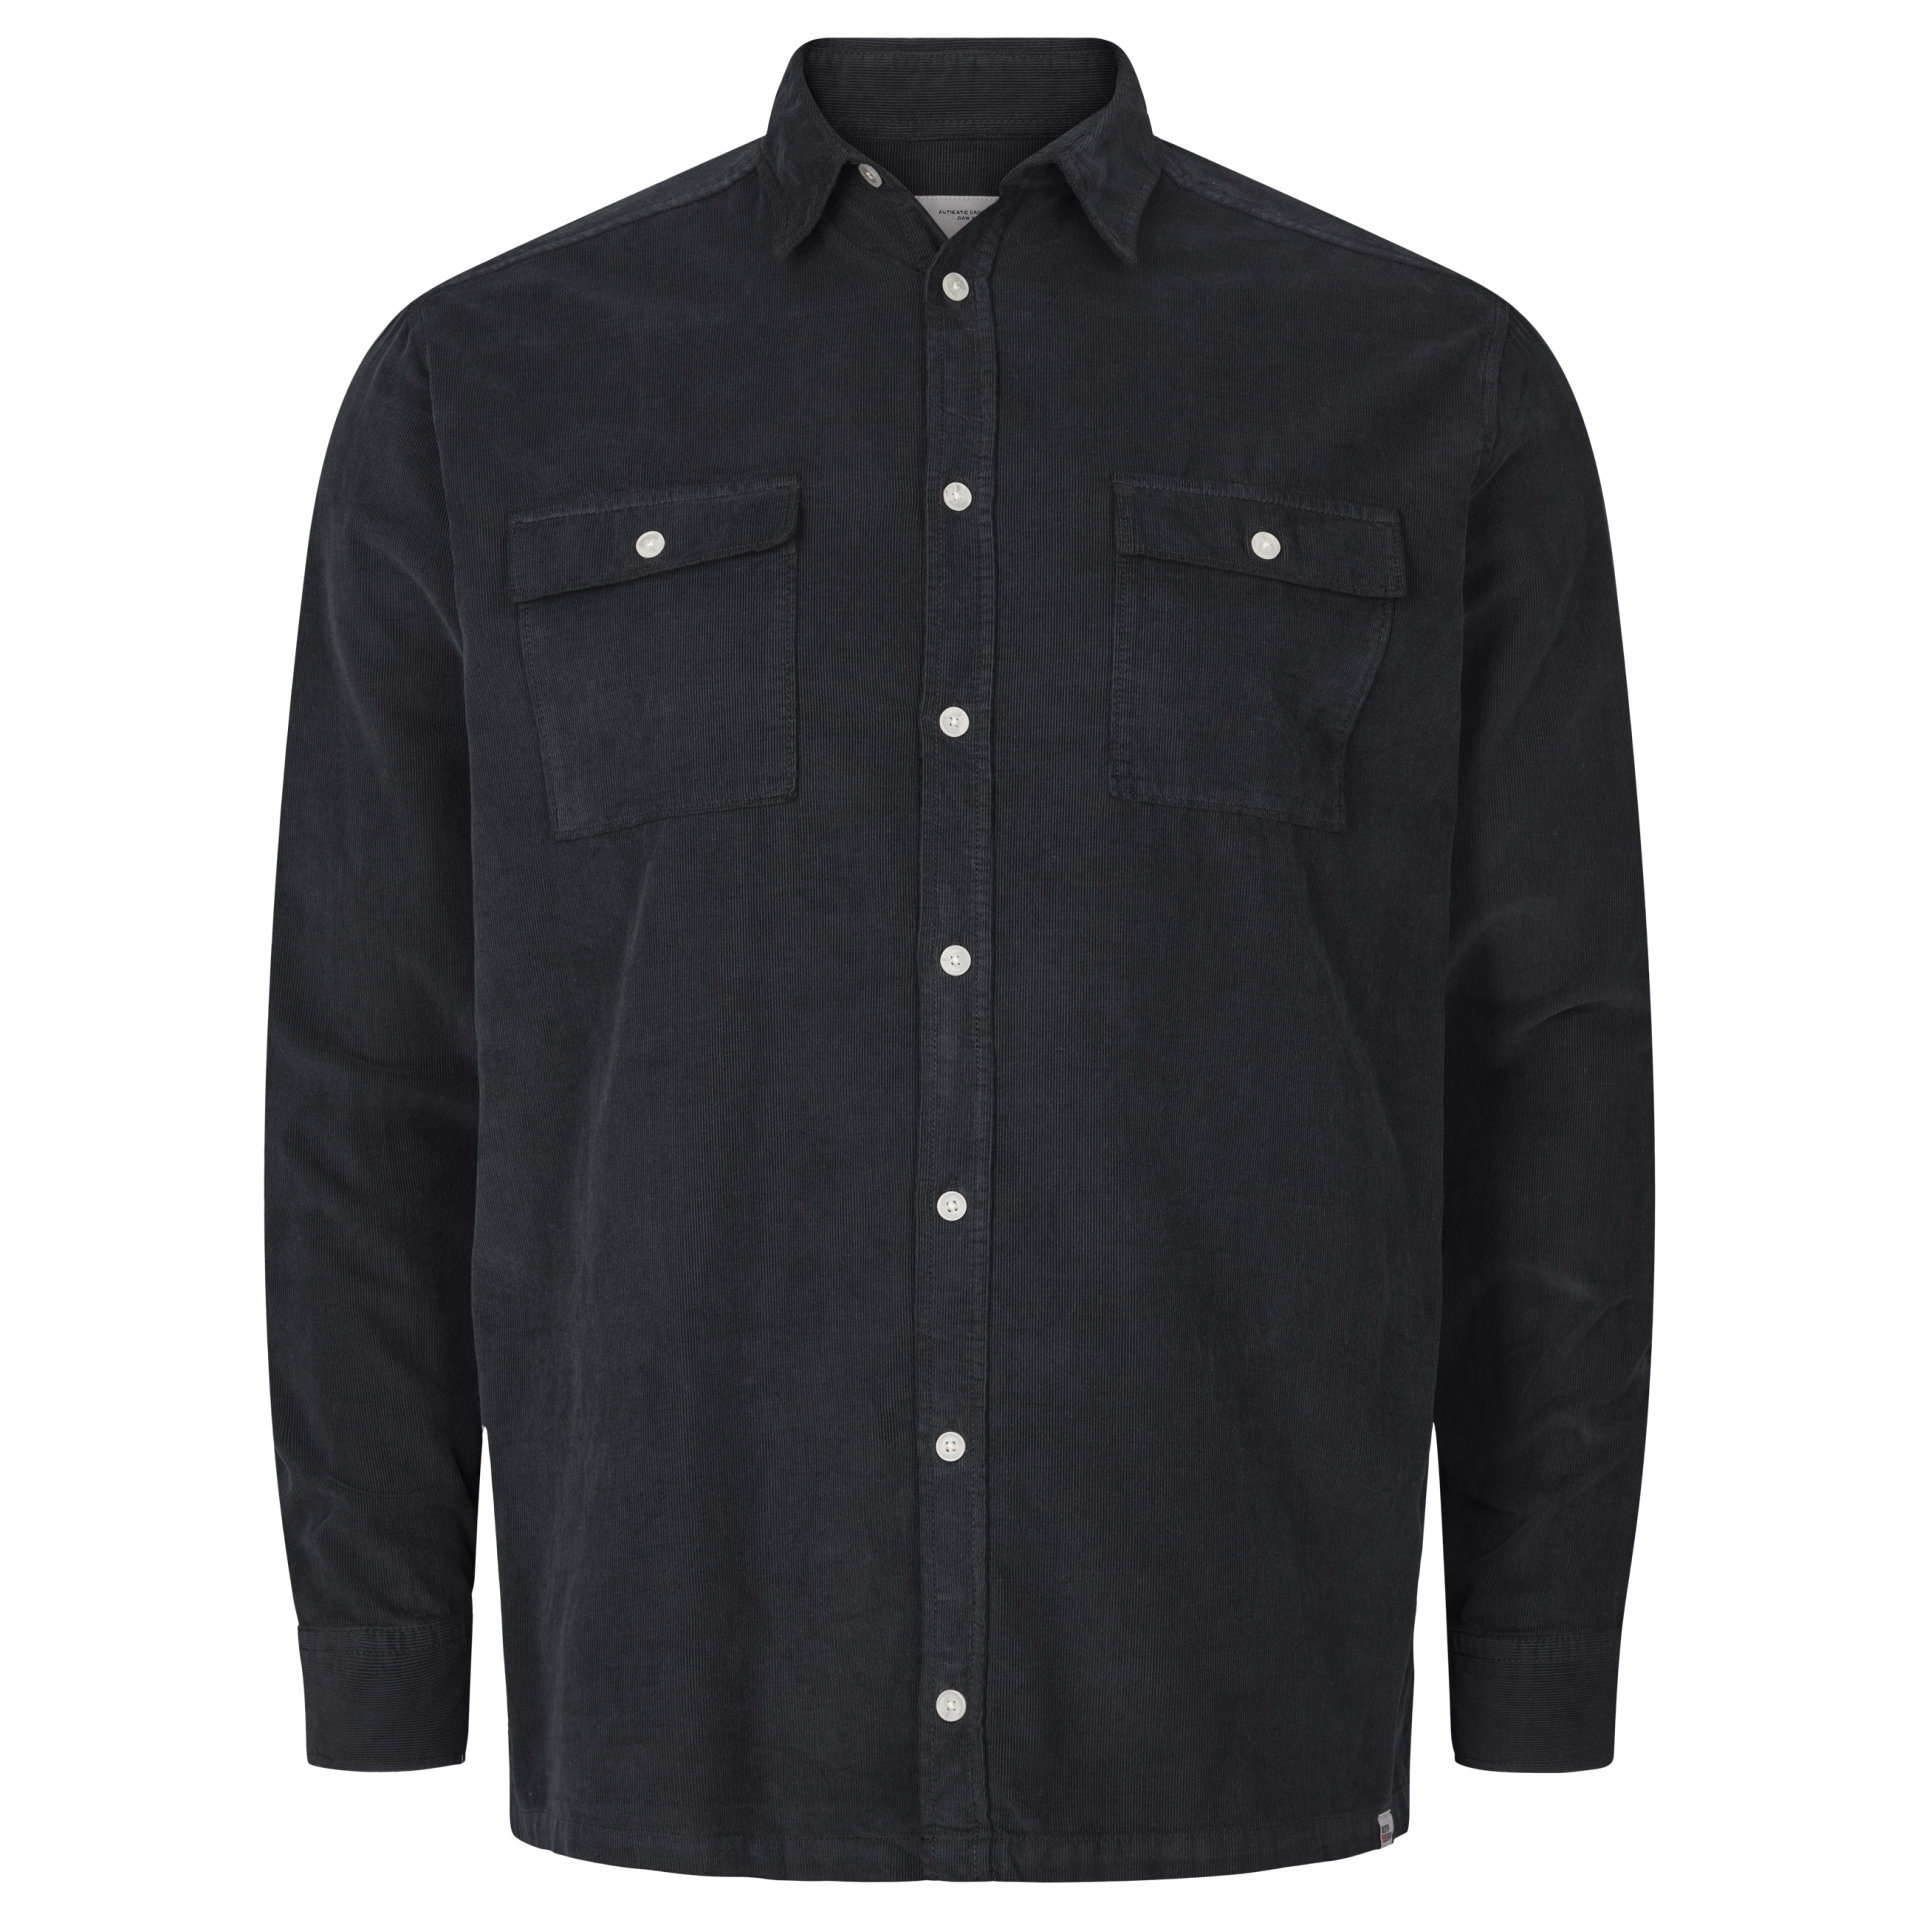 North Casual skjorte sort / 99 black